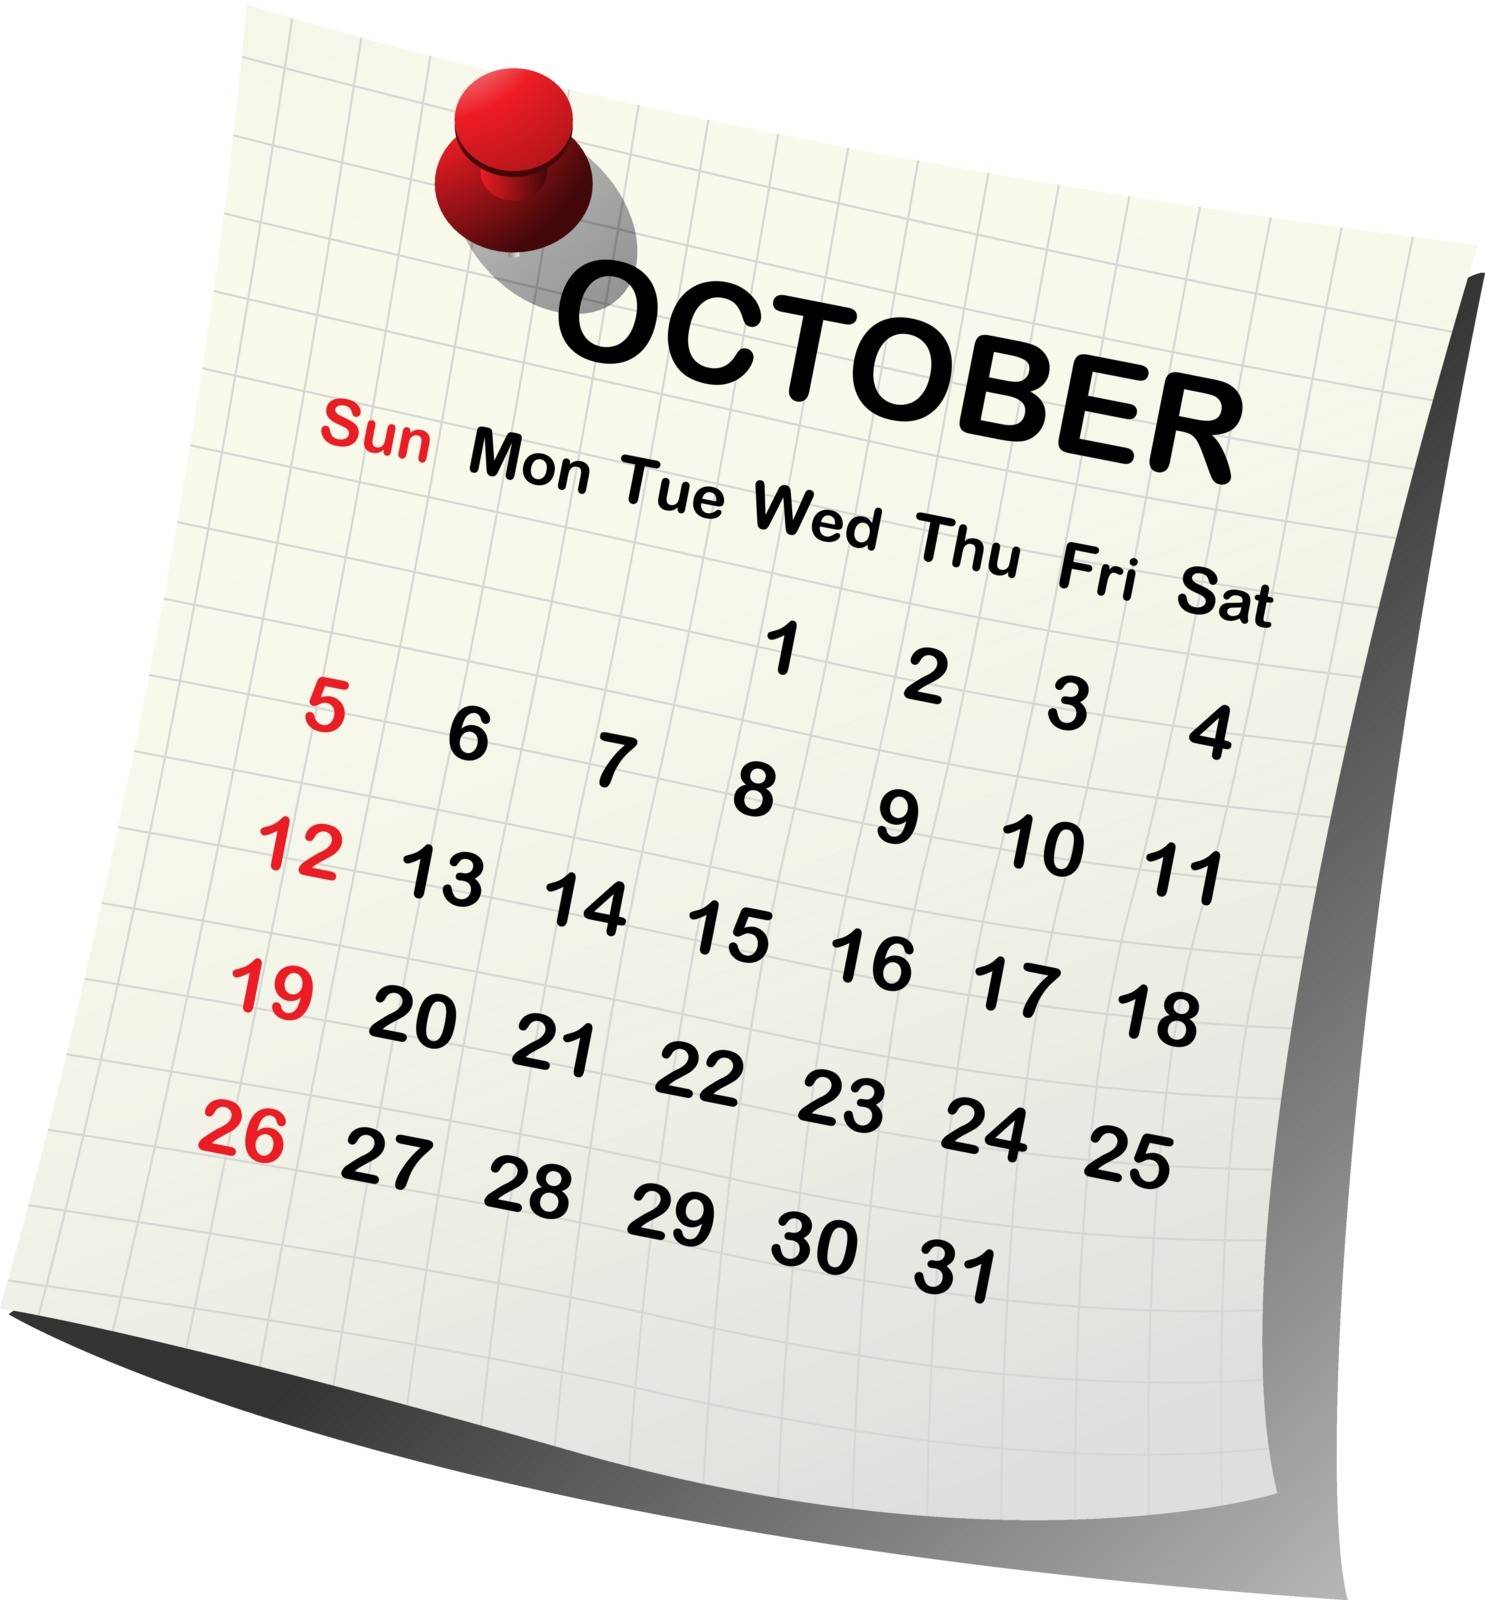 2014 paper calendar for October over white background